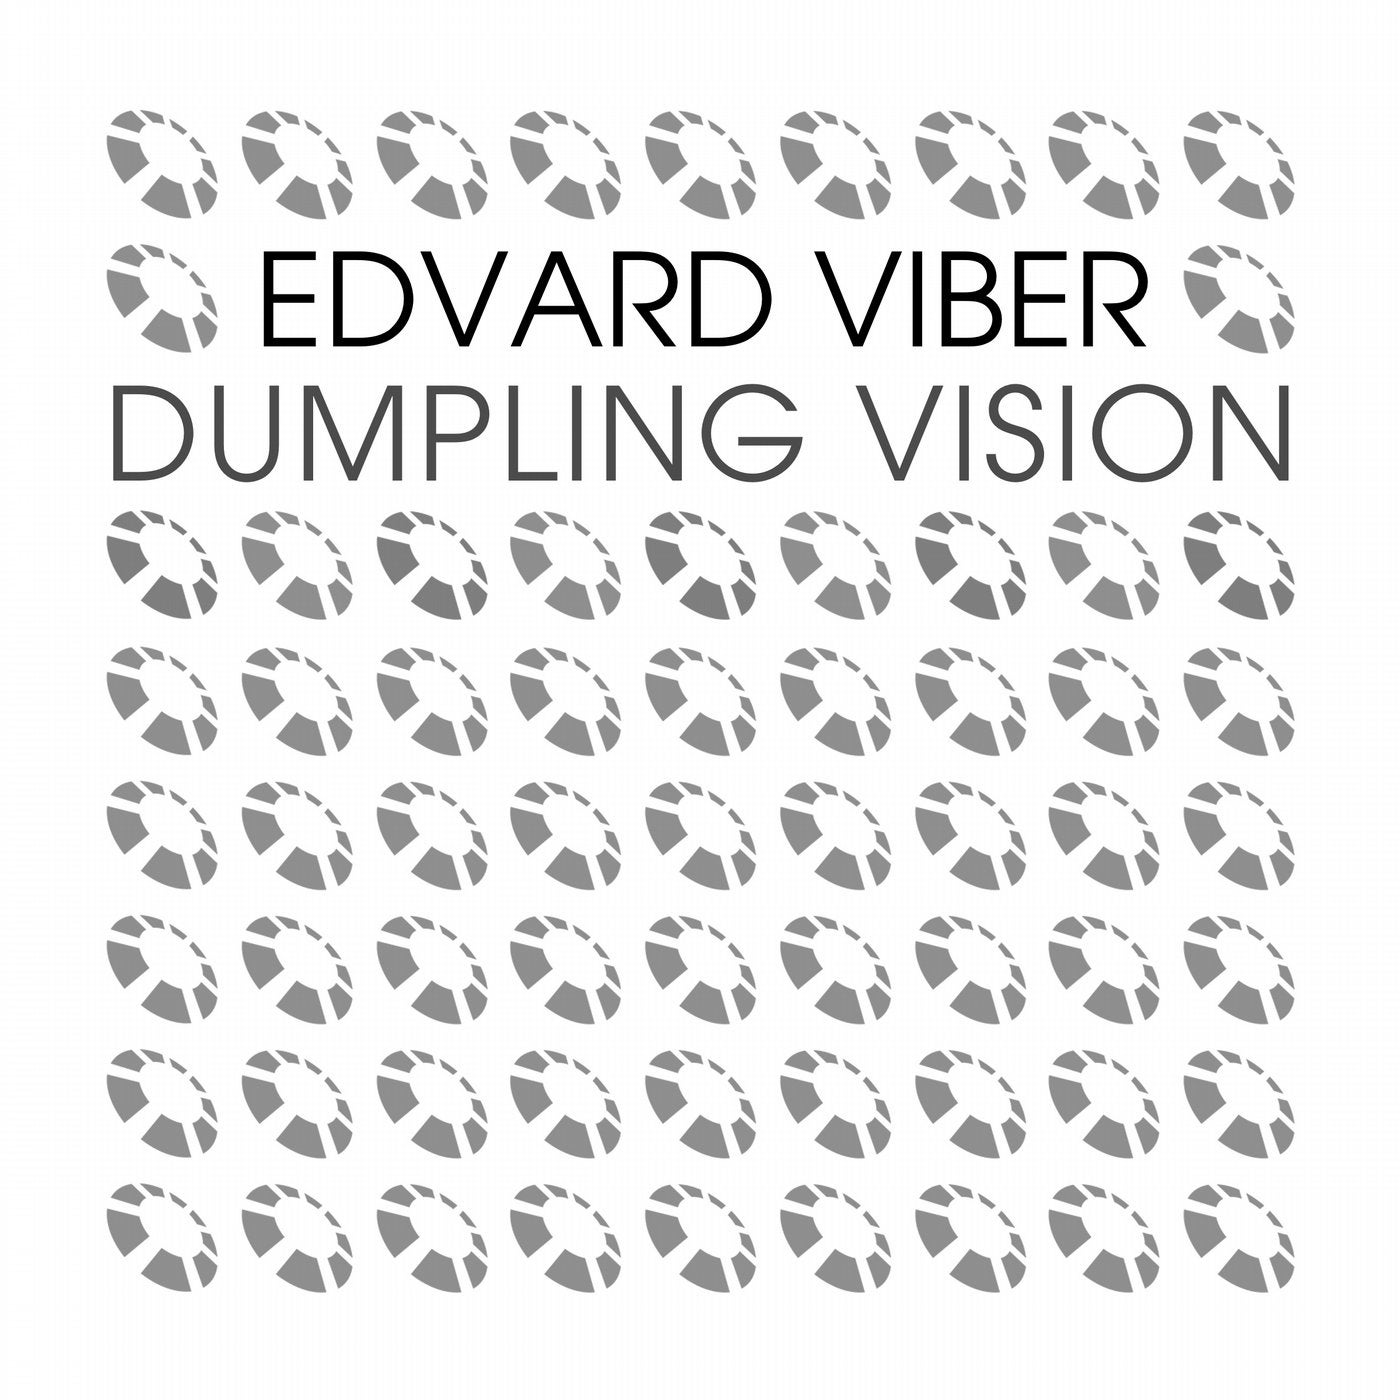 Dumpling Vision